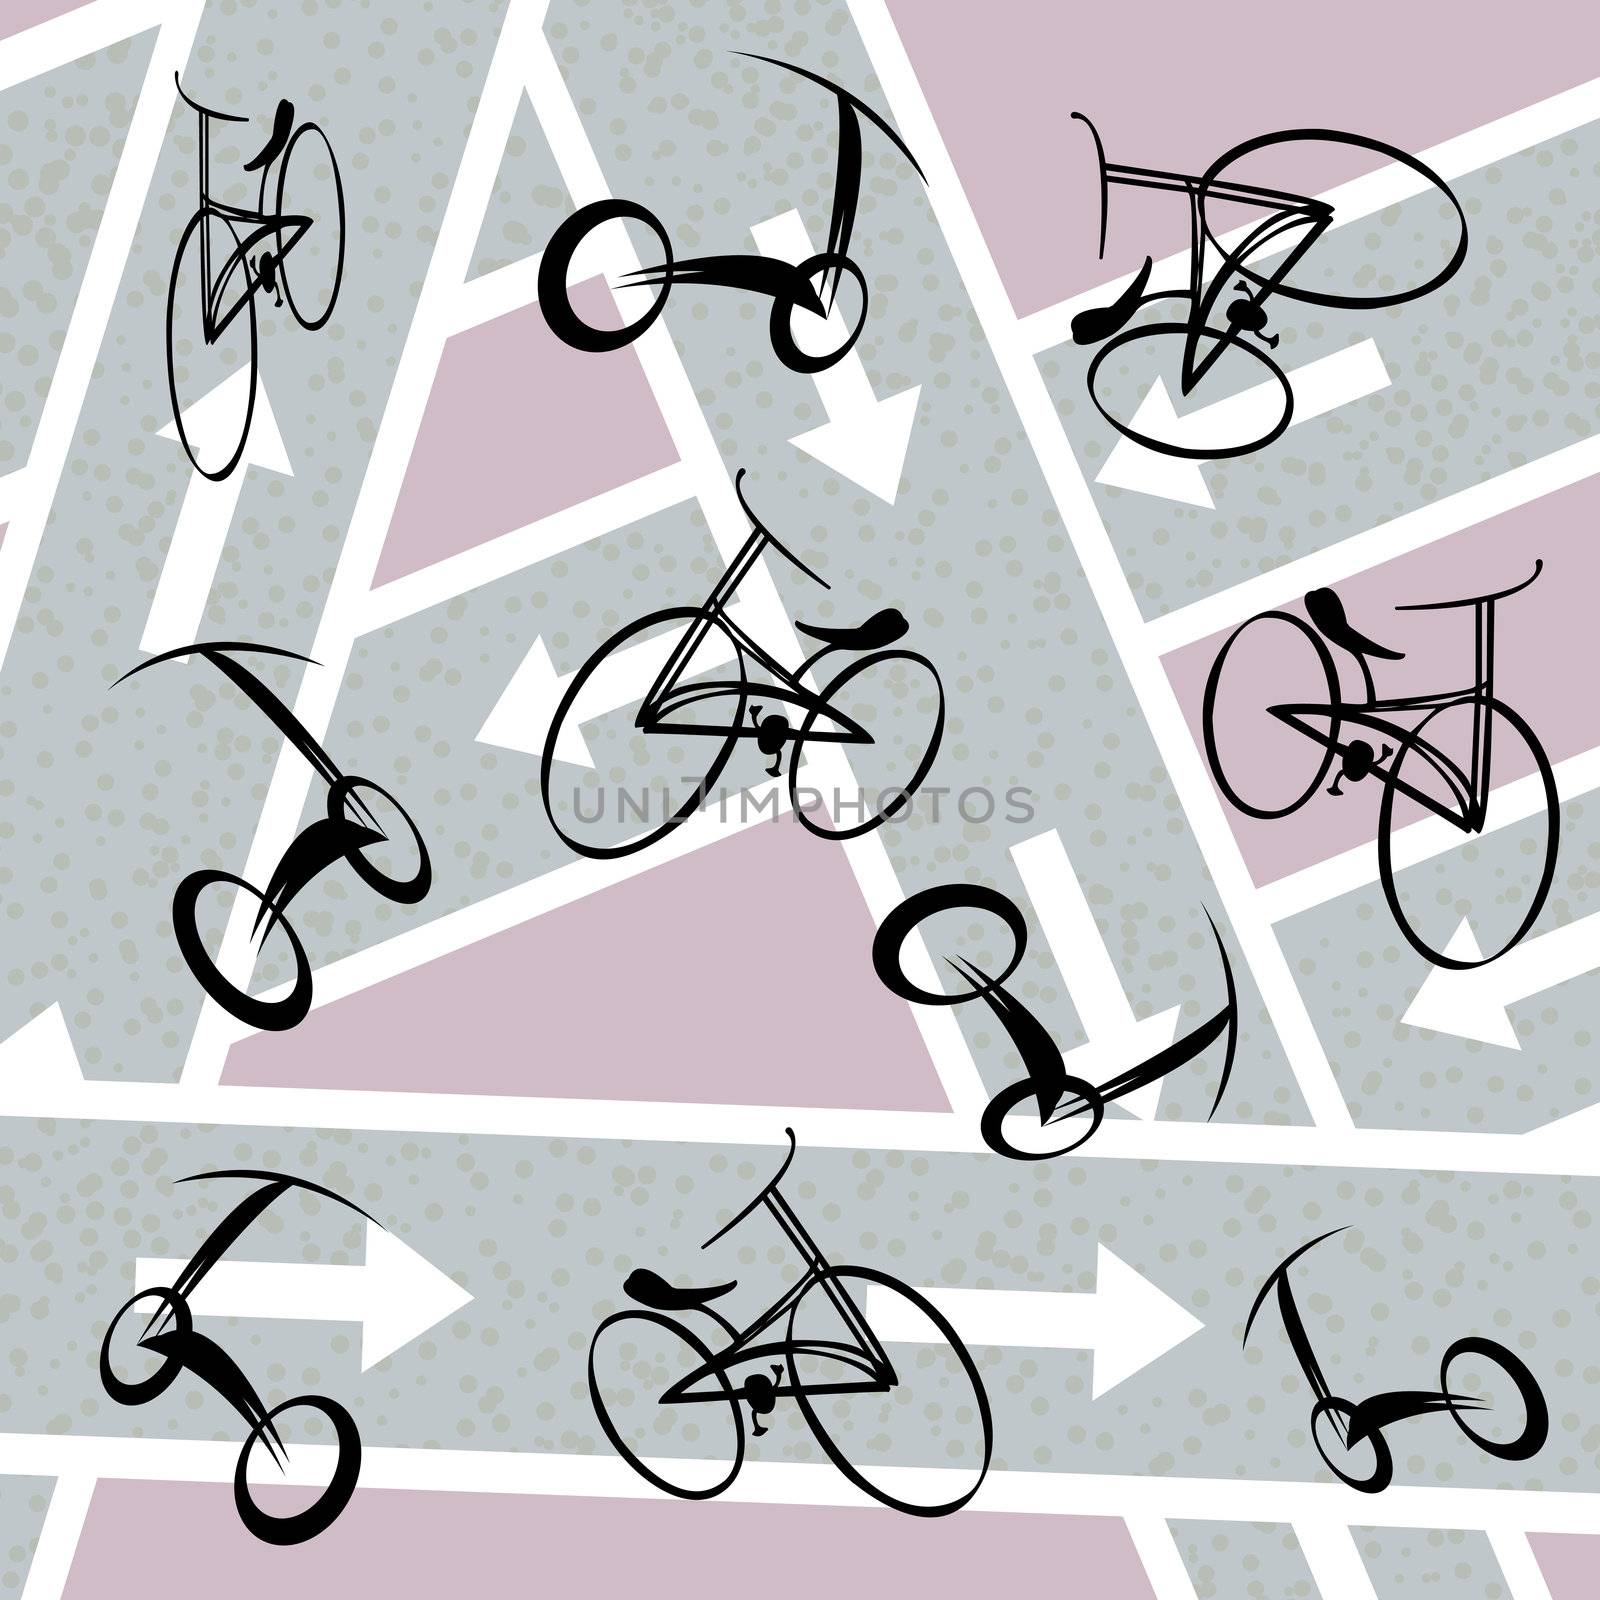 Bicycle pattern by Lirch